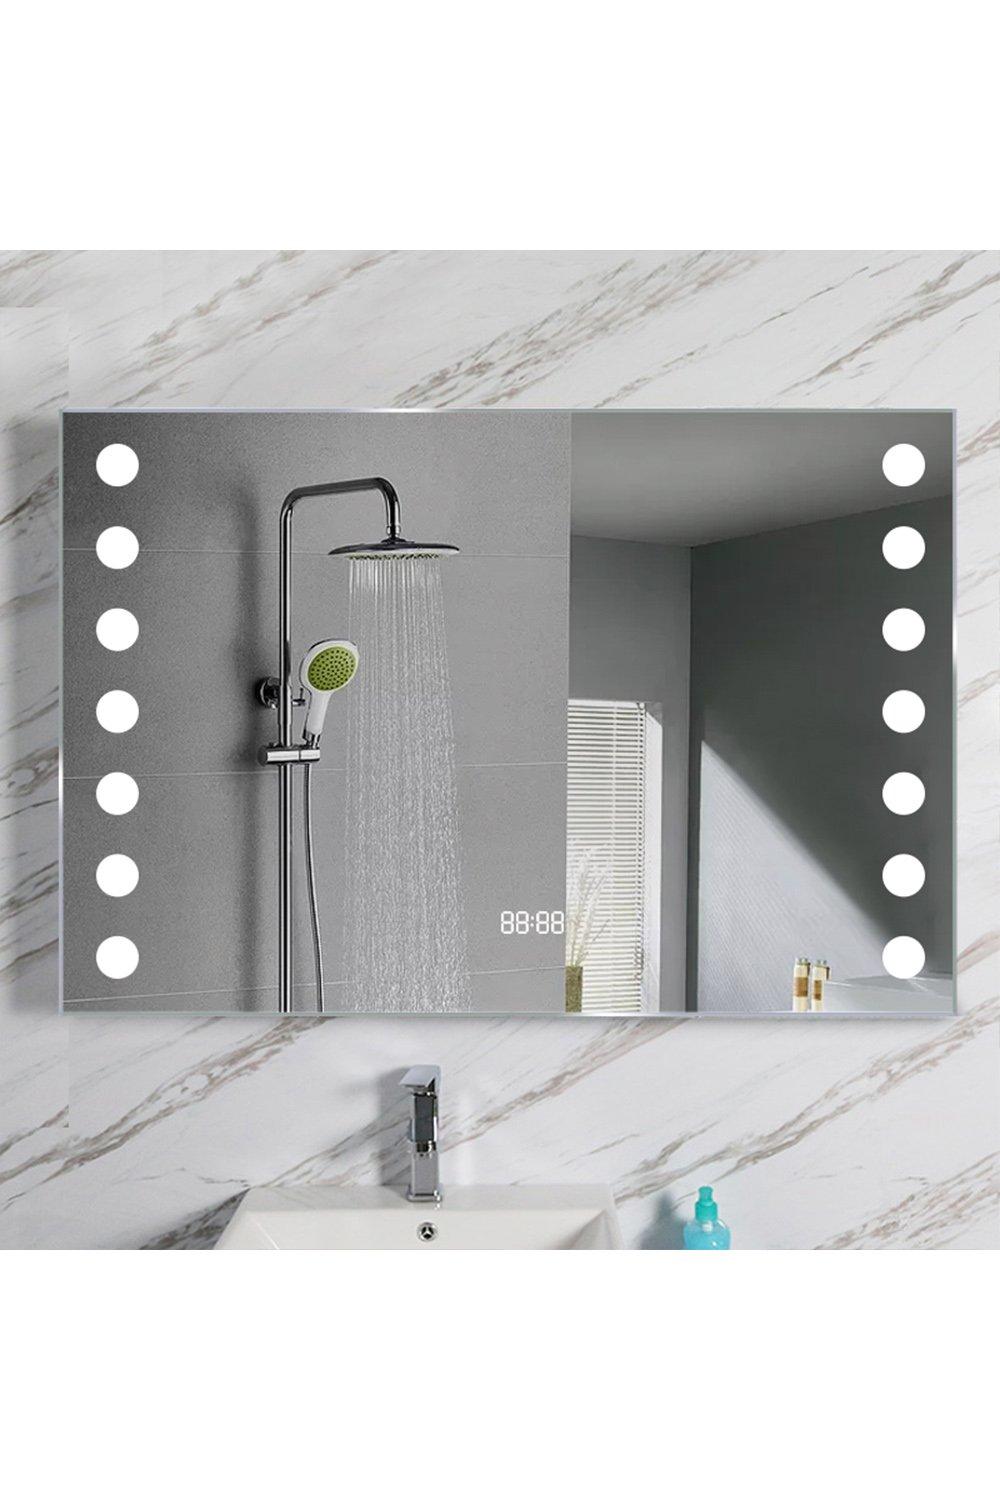 Bathroom Horizontal LED Anti-Fog Mirror with Sensor Switch and Clock